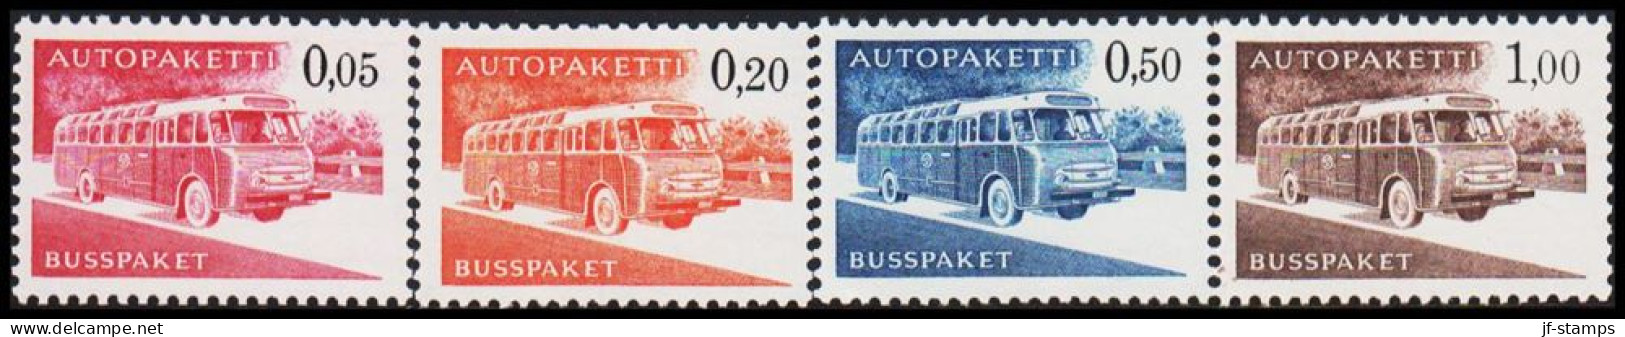 1963-1980. FINLAND. Mail Bus. Complete Set AUTOPAKETTI - BUSSPAKET Never Hinged. Normal... (Michel AP 10-13x) - JF535608 - Pakjes Per Postbus